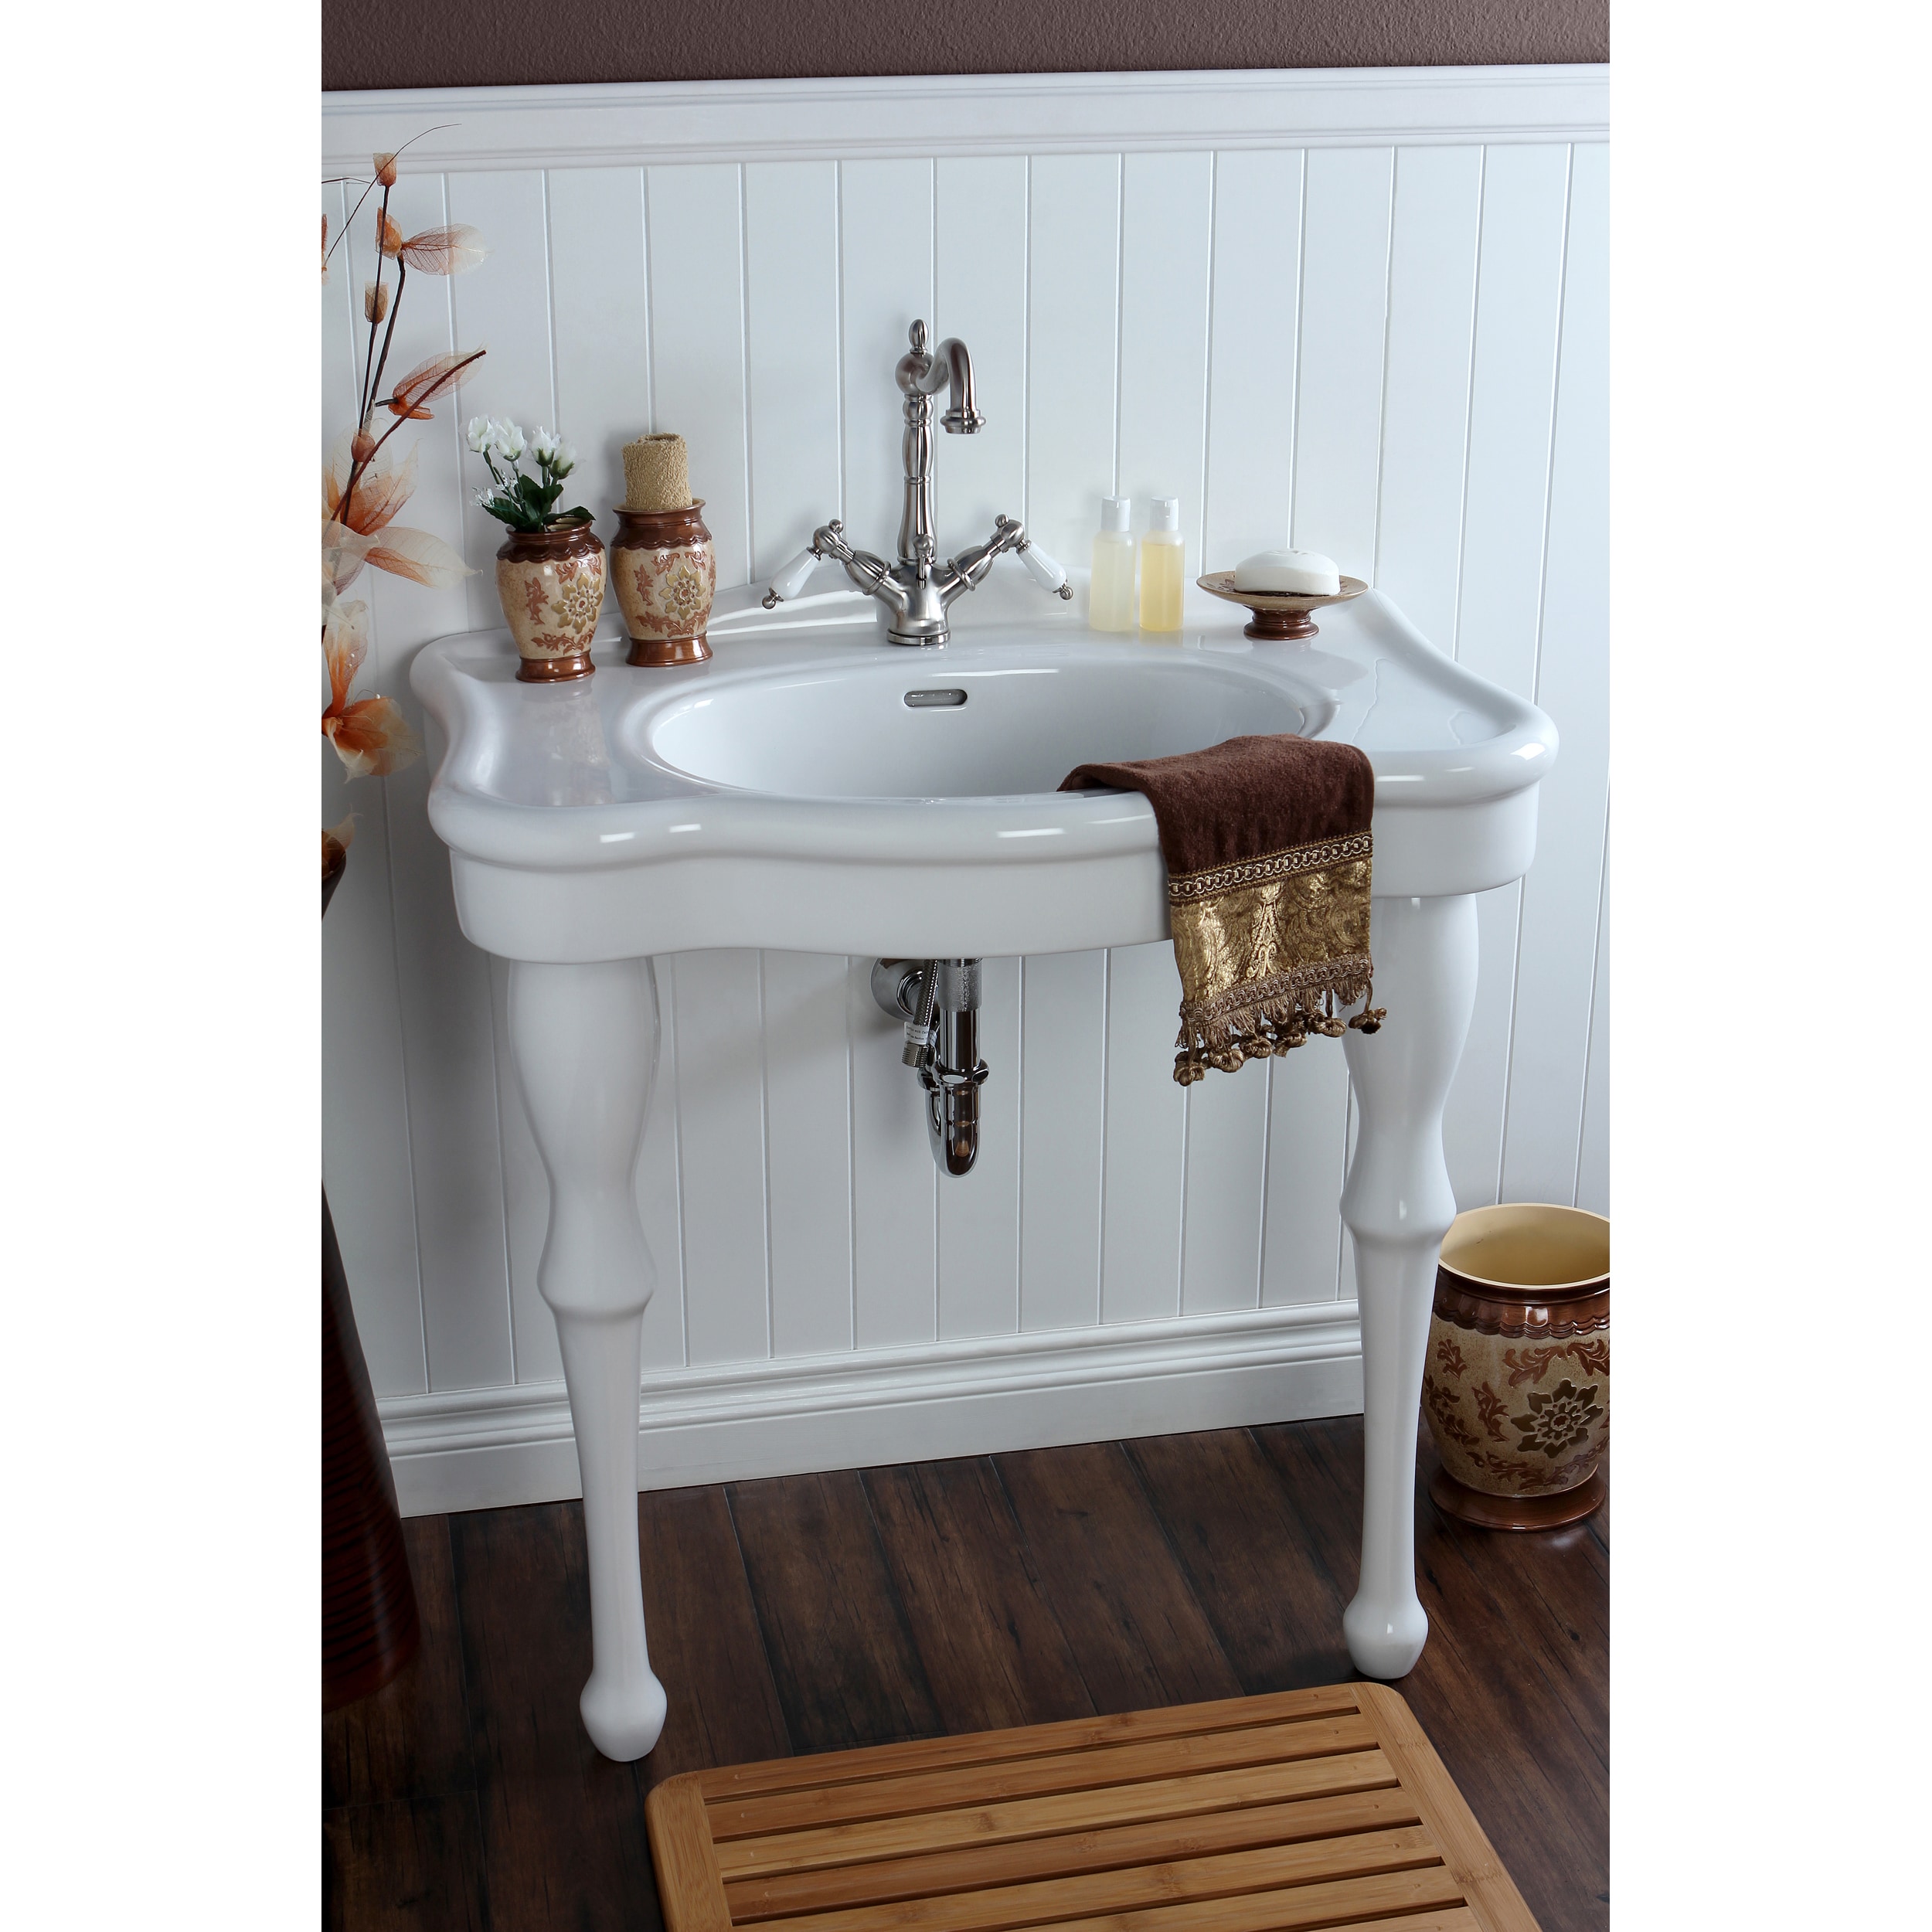 https://ak1.ostkcdn.com/images/products/8036004/Vintage-32-inch-for-Single-hole-Wall-Mount-Pedestal-Bathroom-Sink-Vanity-42f35c99-404f-4003-a6b8-52085218c676.jpg